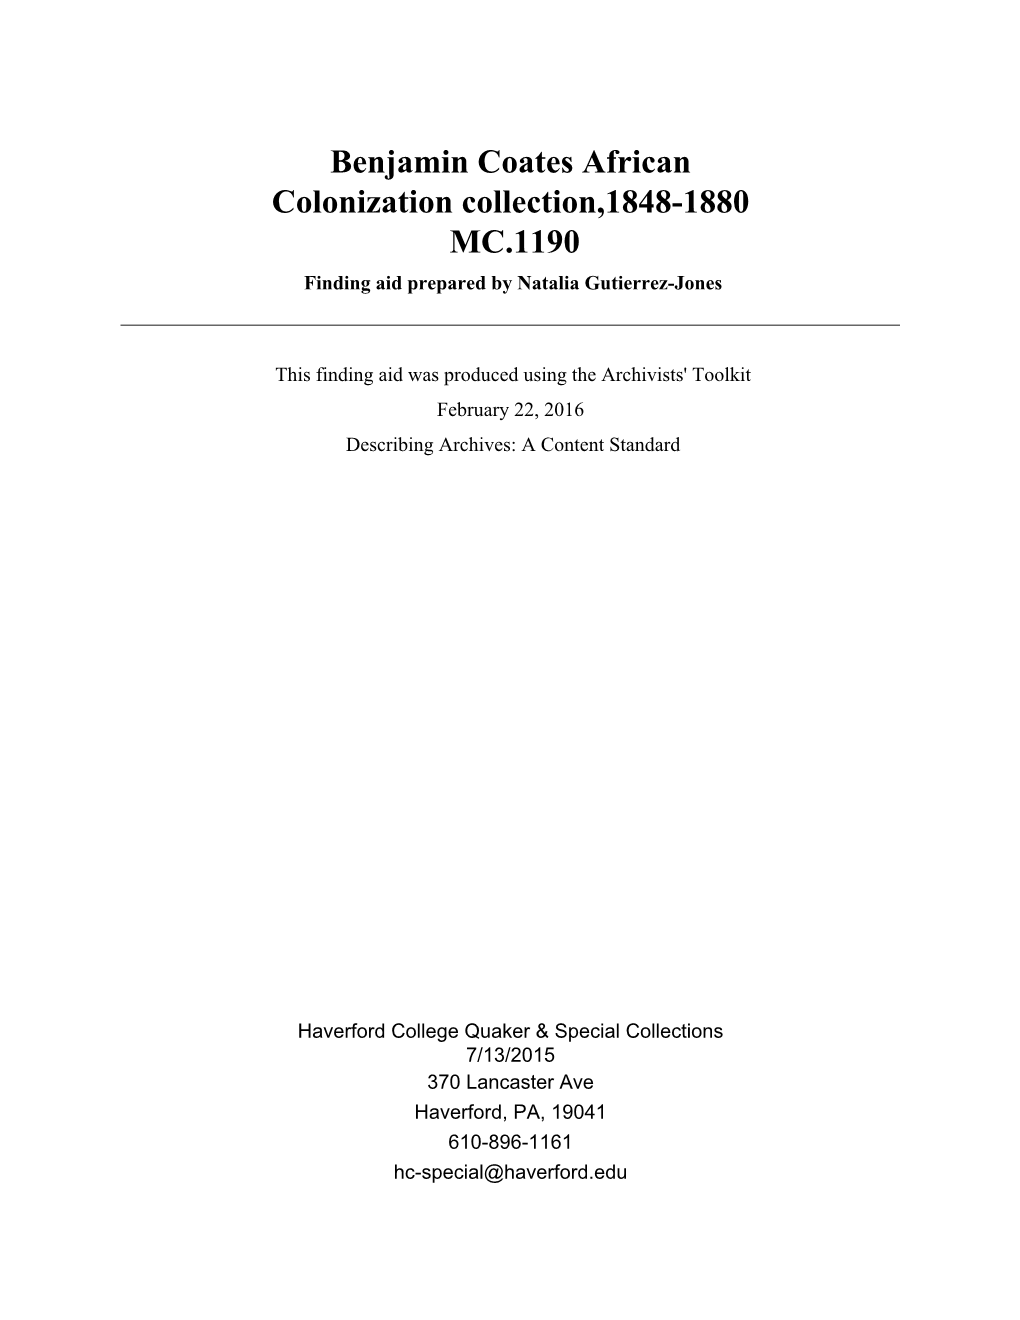 Benjamin Coates African Colonization Collection,1848-1880 MC.1190 Finding Aid Prepared by Natalia Gutierrez-Jones